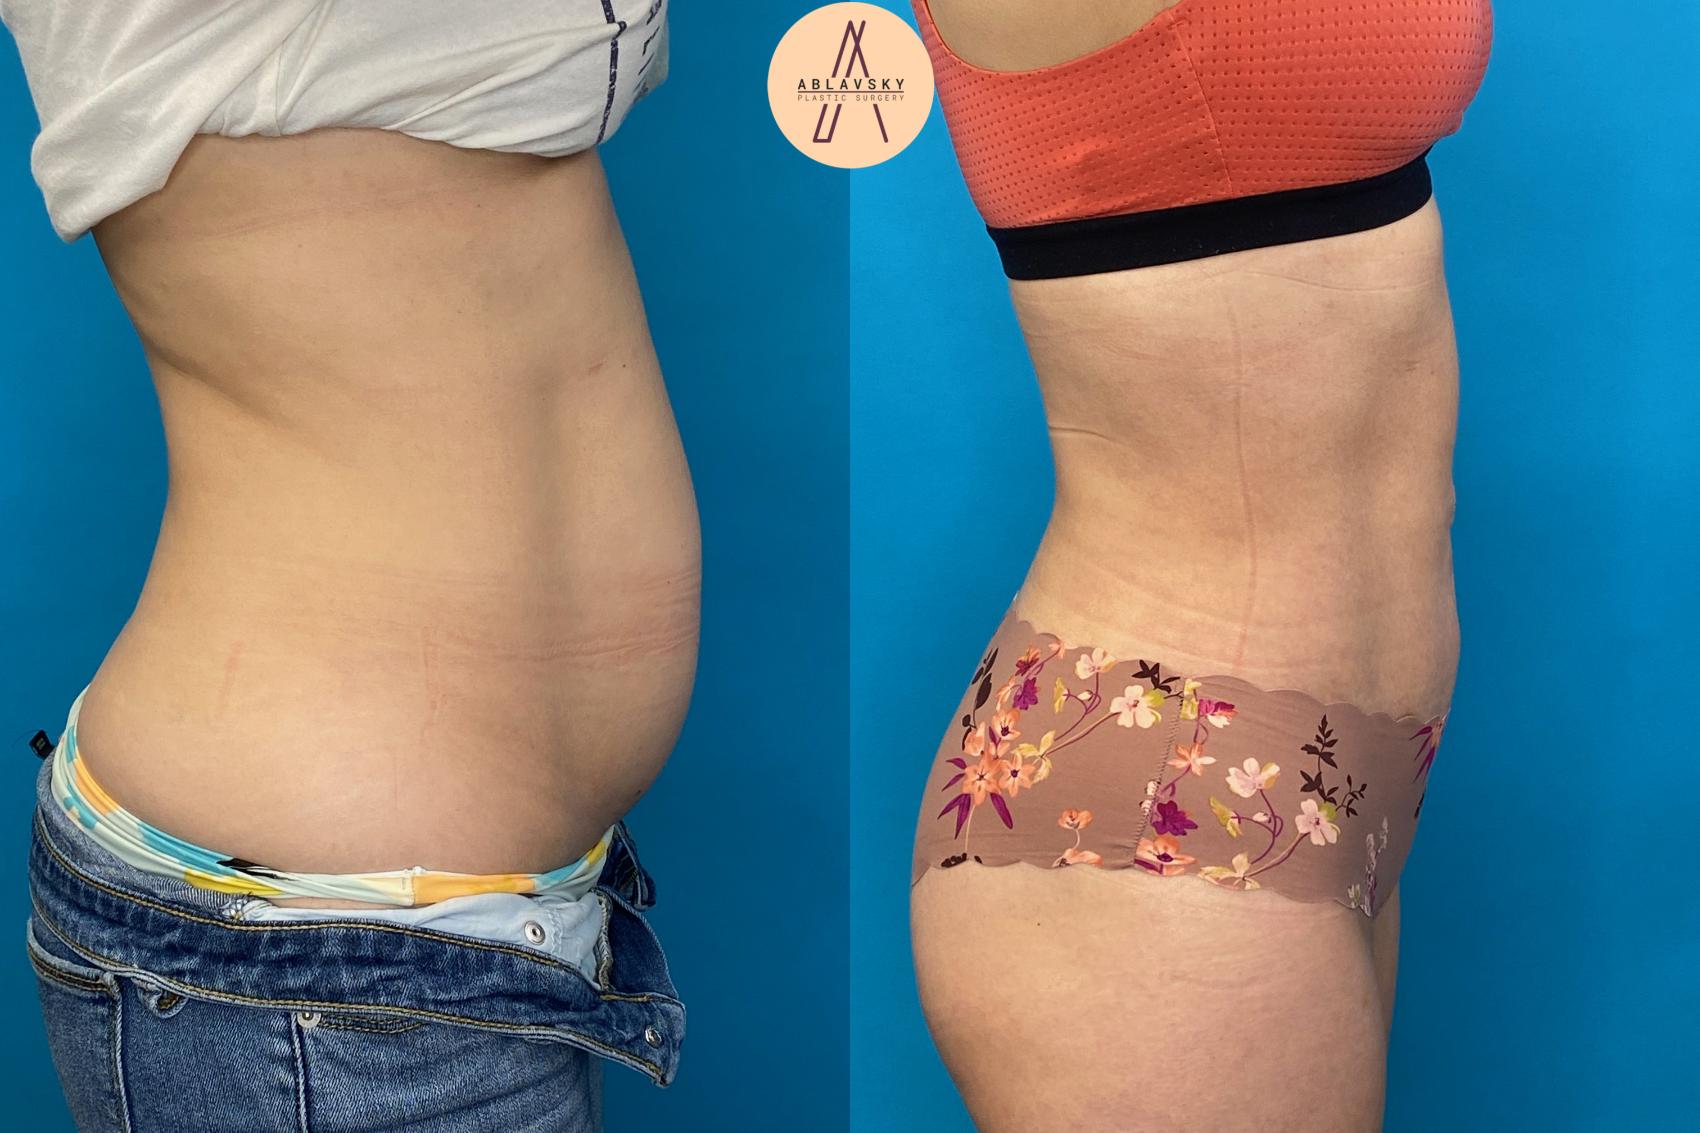 Liposuction 360 of abdomen and hips San Antonio Ablavsky Plastic Surgery